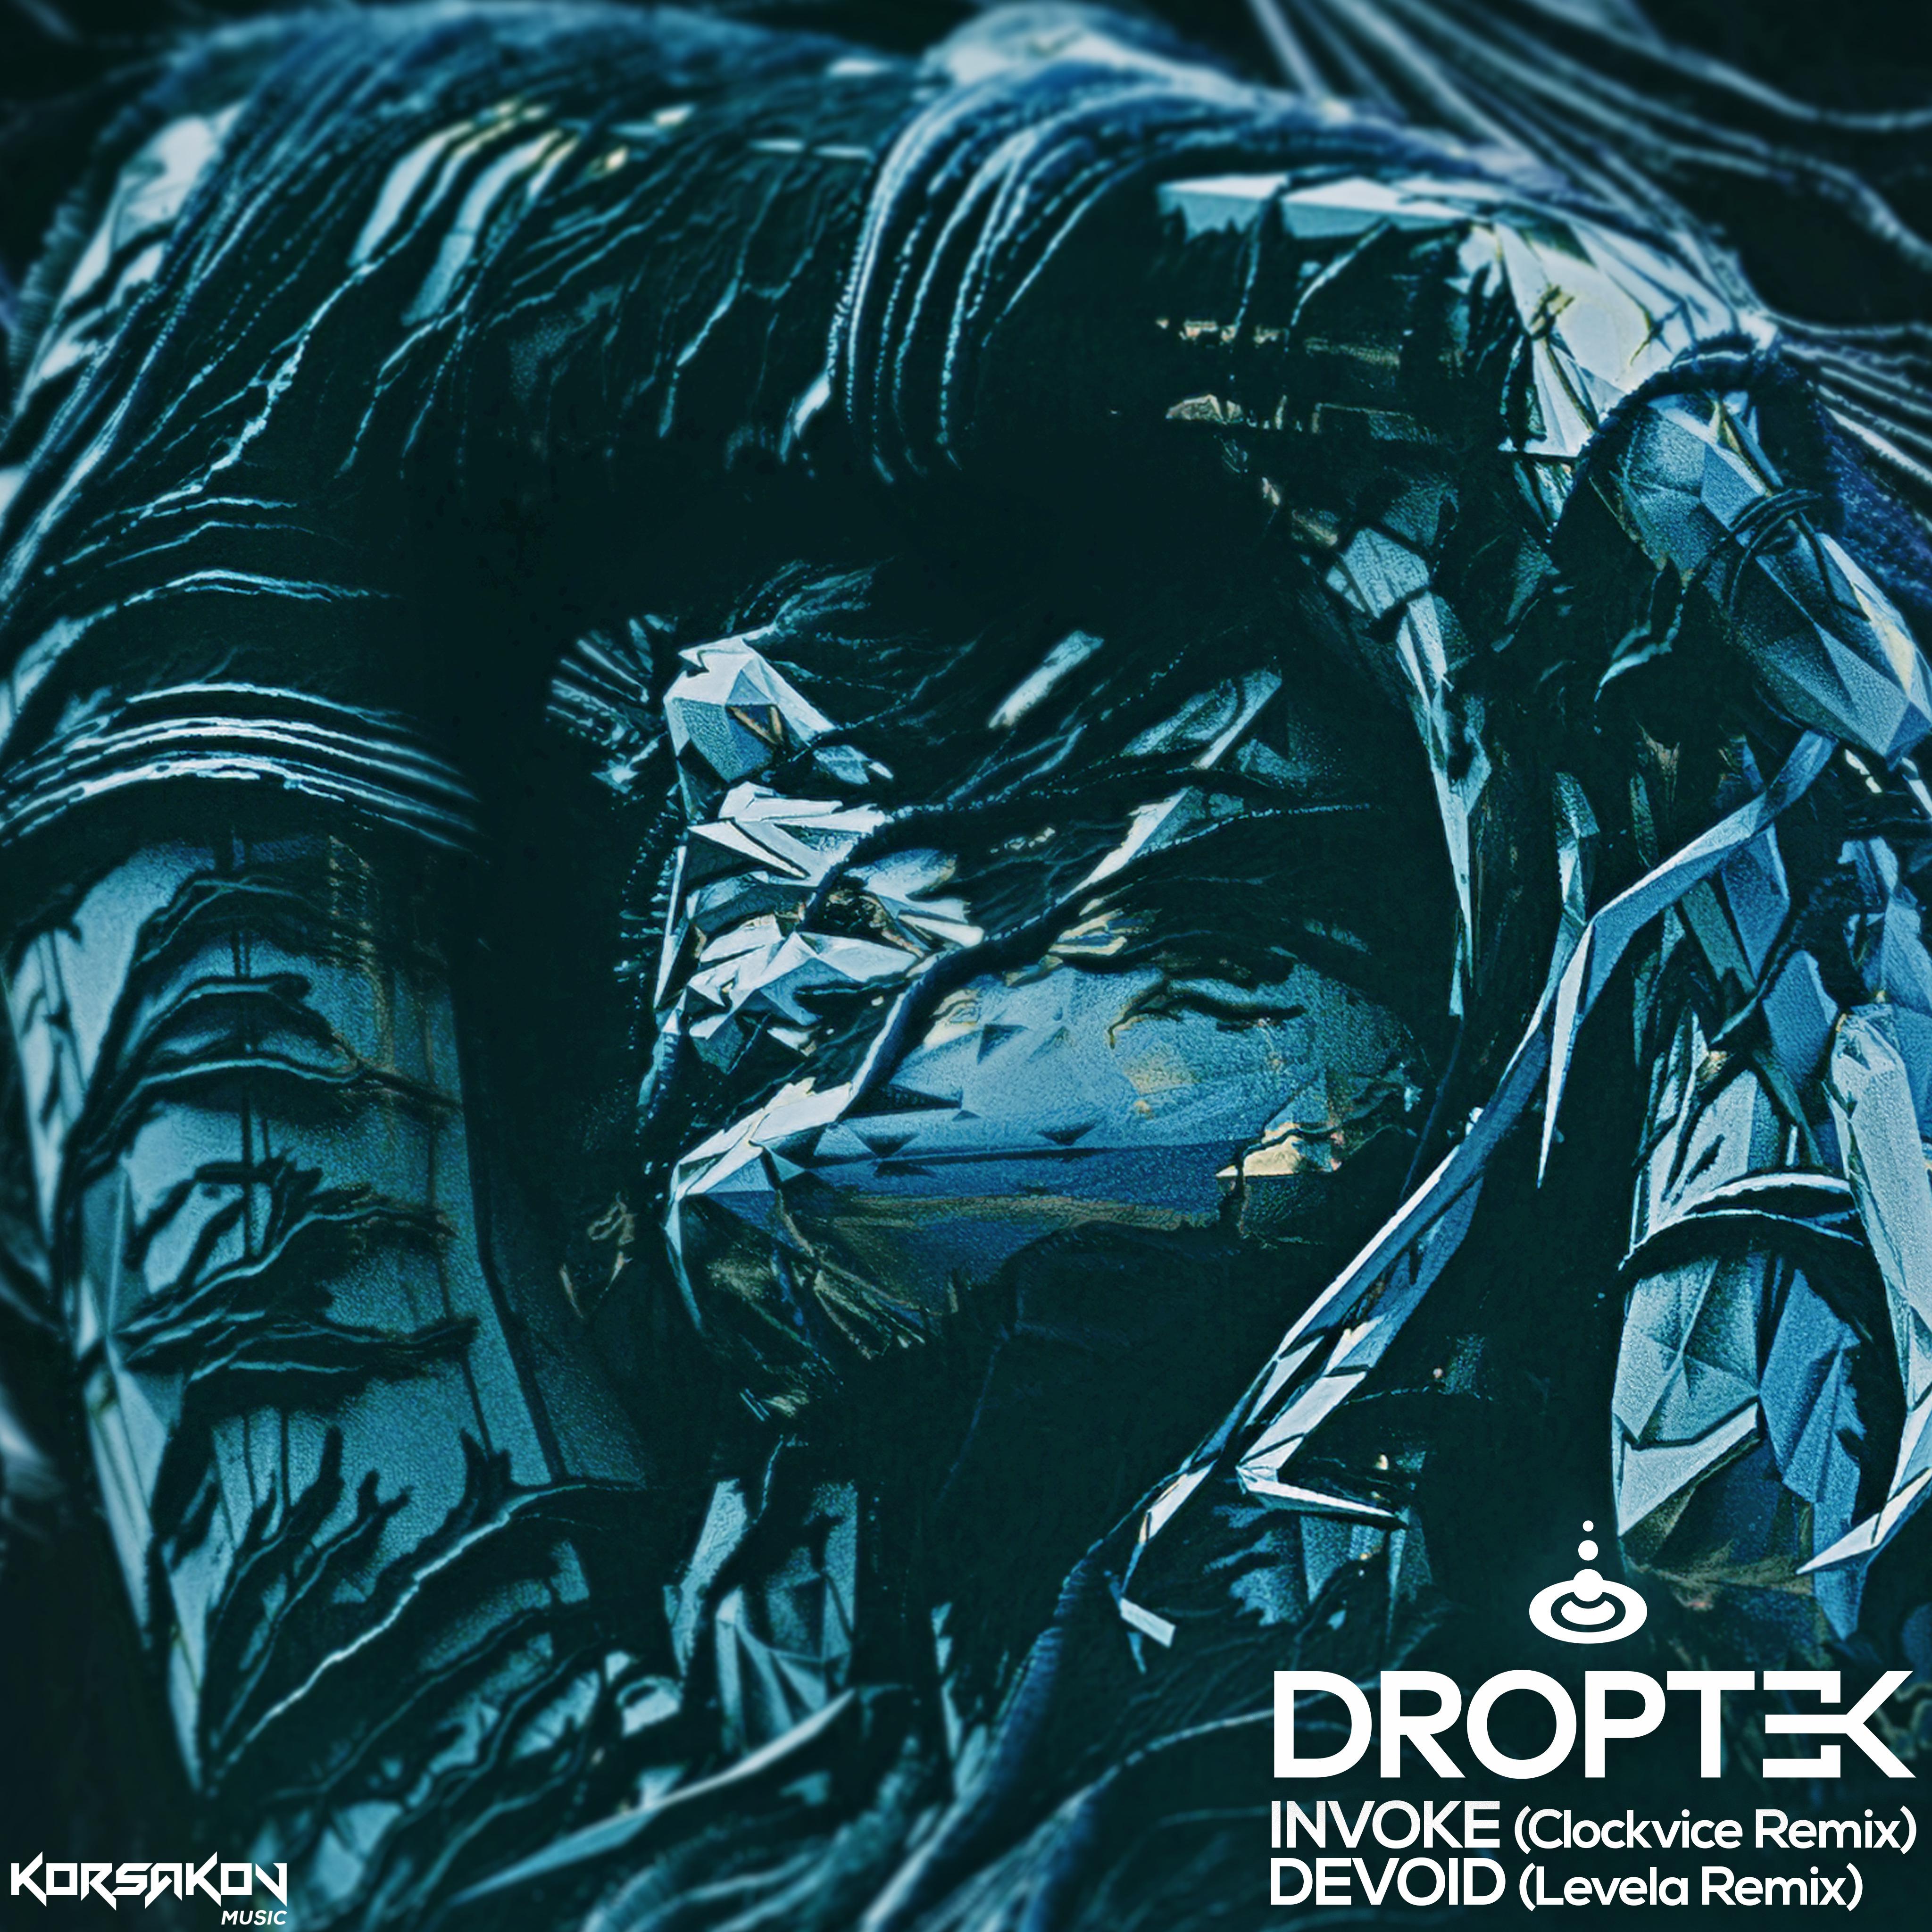 Droptek - Devoid (Levela Remix)